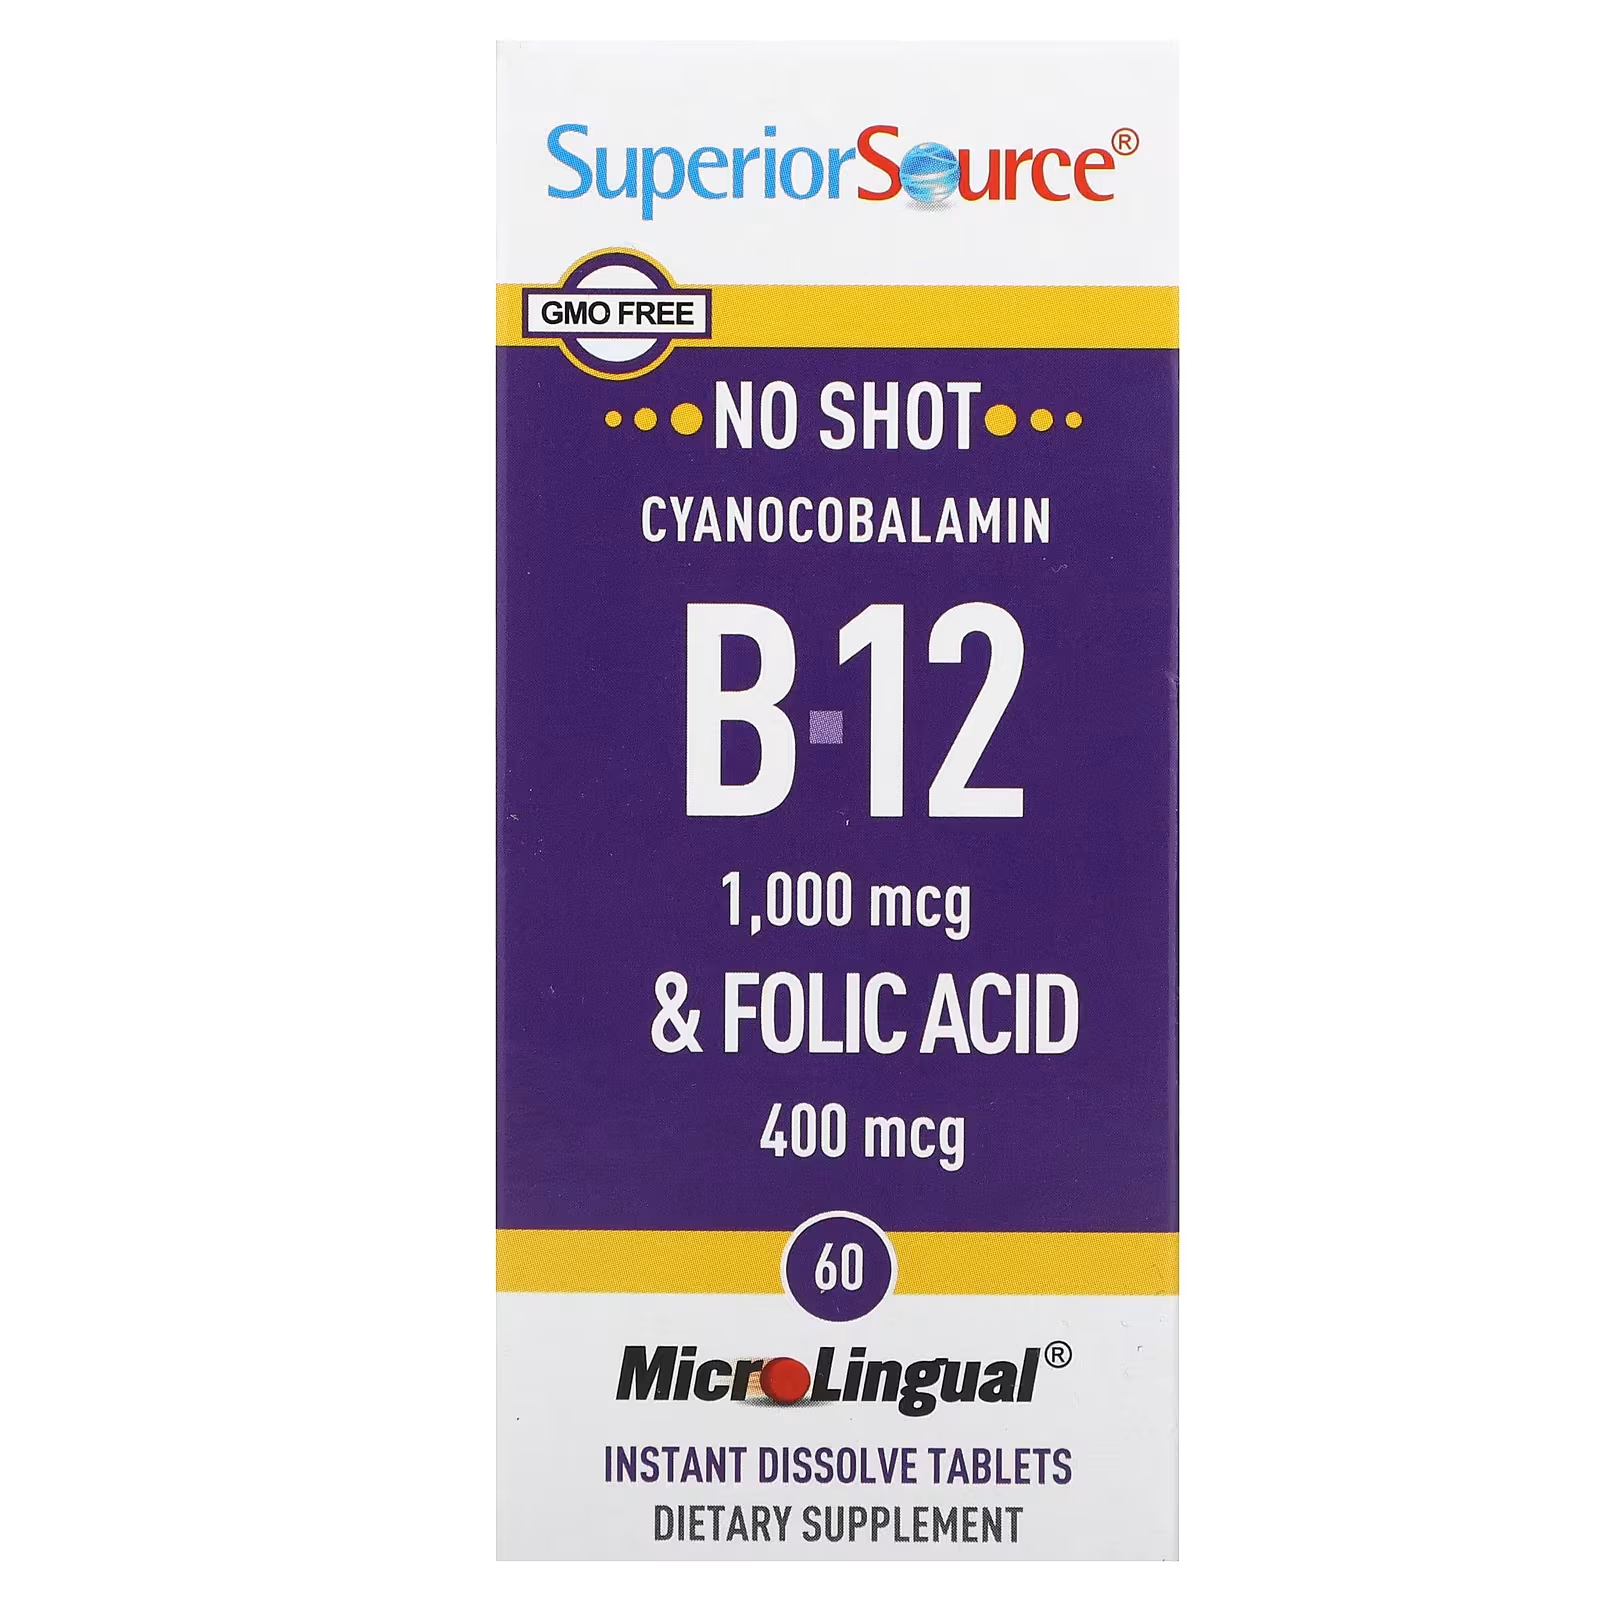 цена Цианокобаламин B-12 и фолиевая кислота MicroLingual Superior Source, 60 растворяющихся таблеток